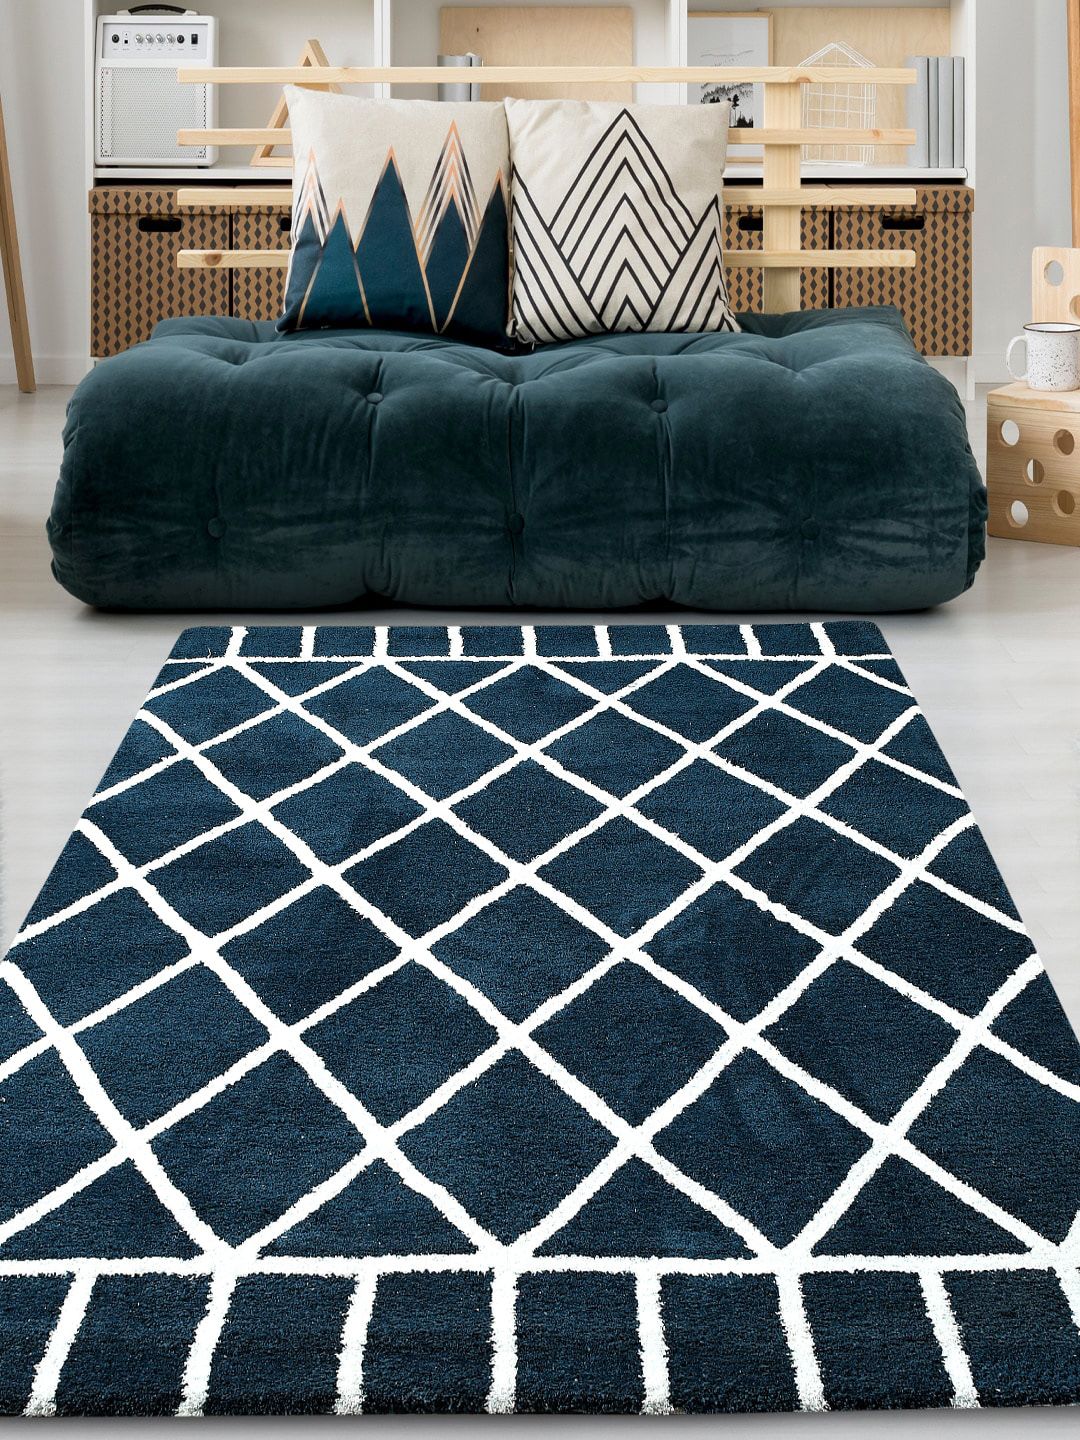 Saral Home Teal Blue & White Printed Cotton Rectangular Carpet Price in India